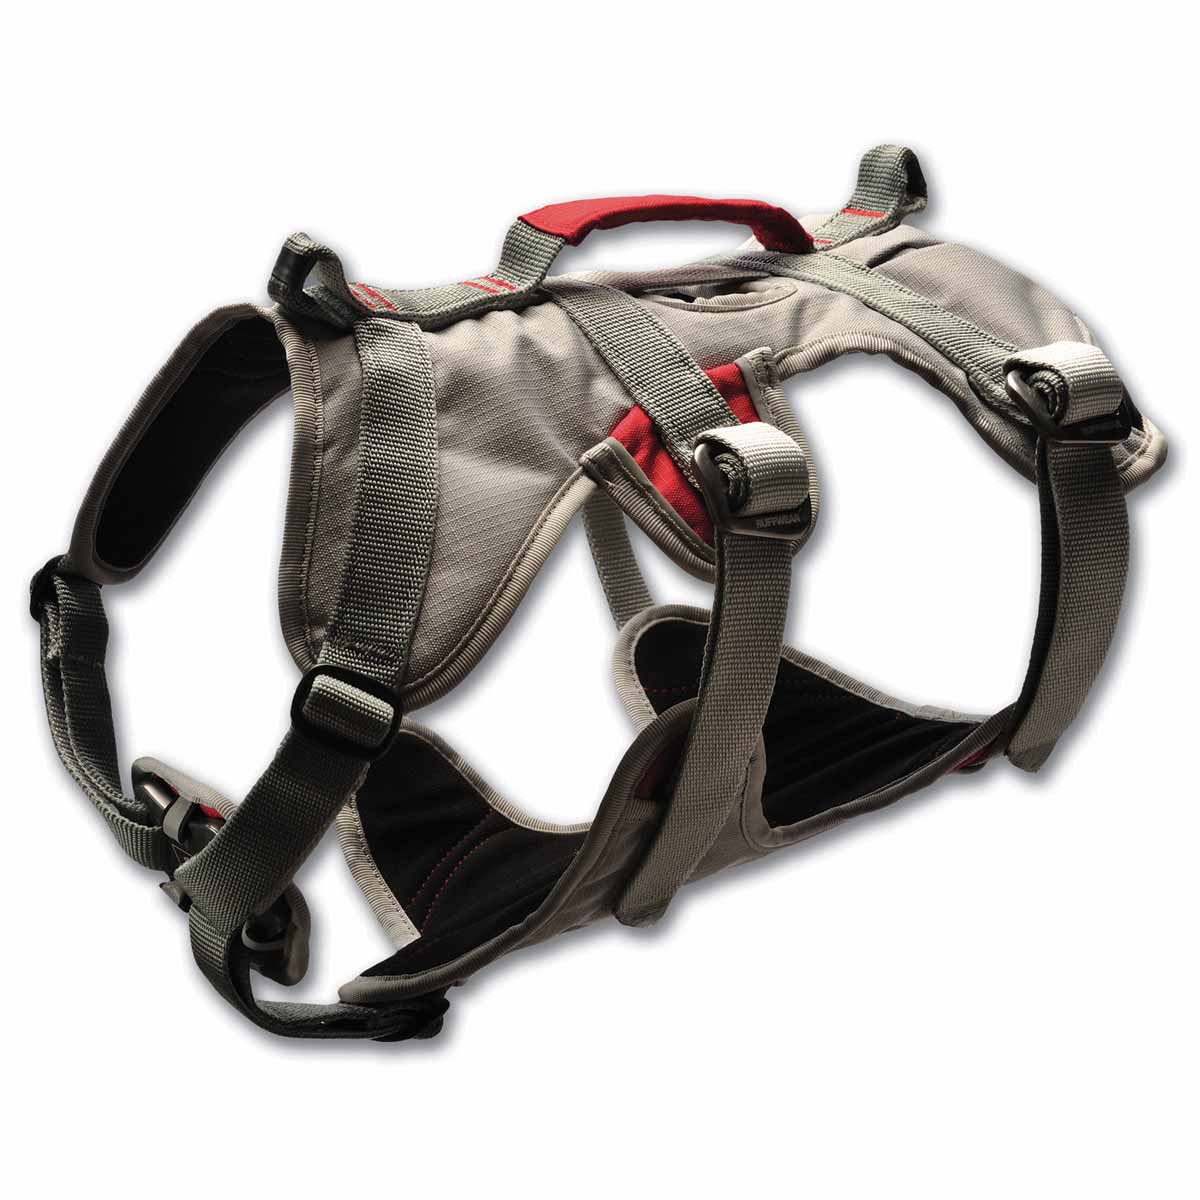 DoubleBack Dog Harness by RuffWear - Cloudburst Gray